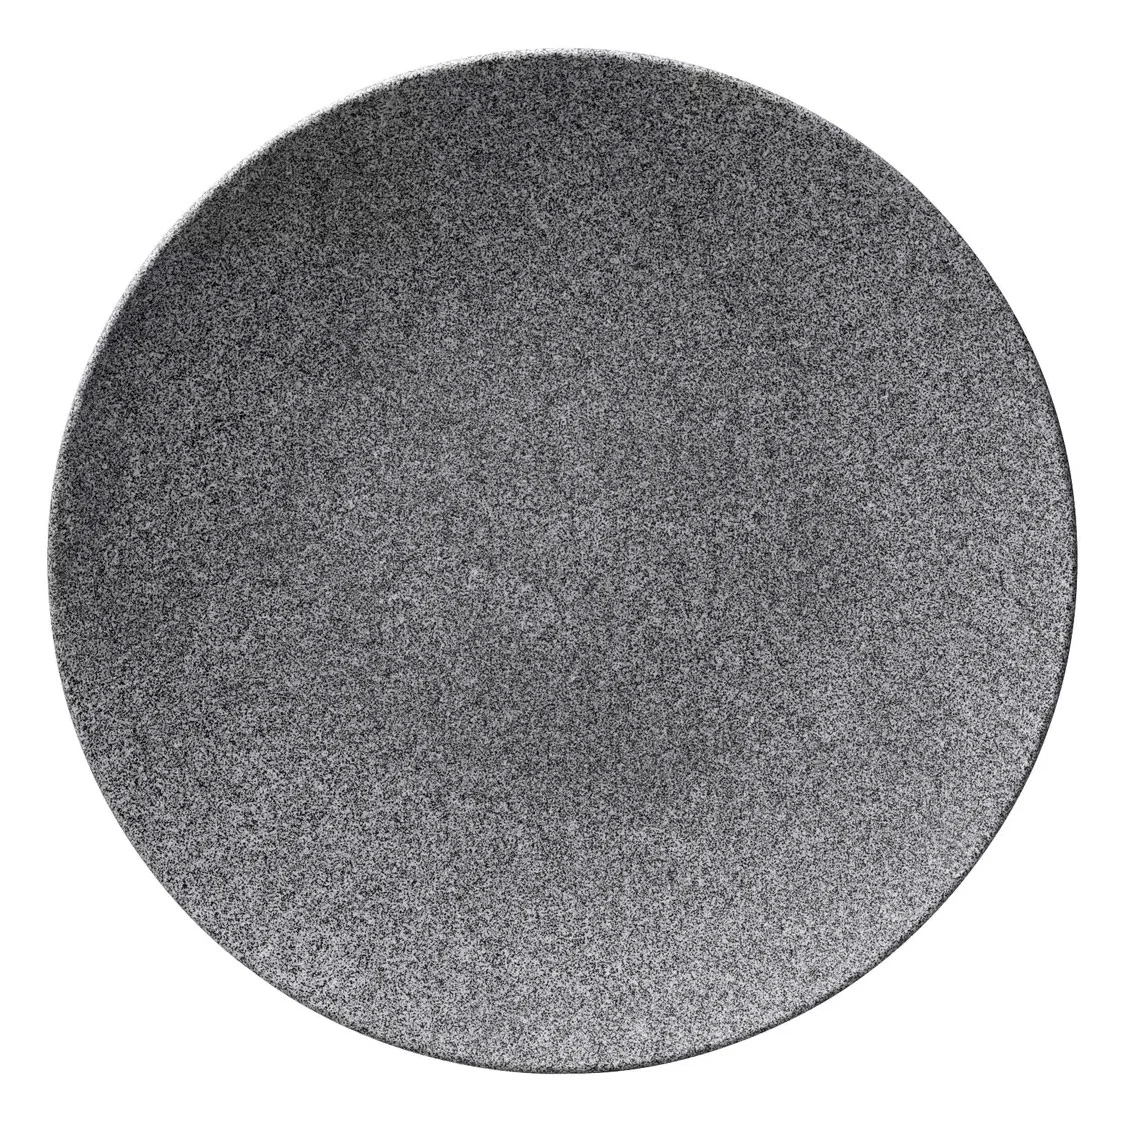 Manufacture Rock Granit Плоская тарелка 25 см